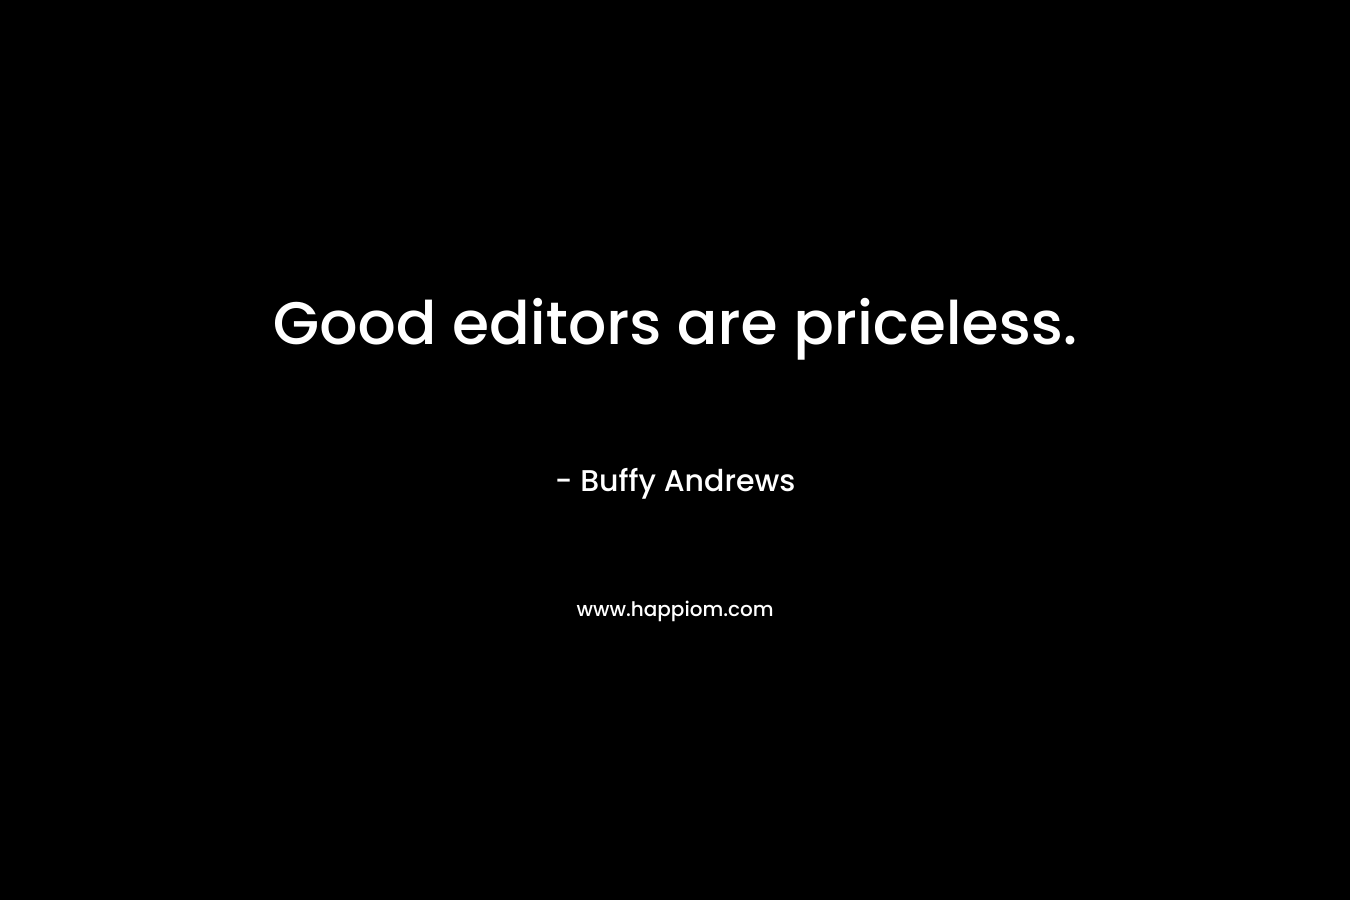 Good editors are priceless.